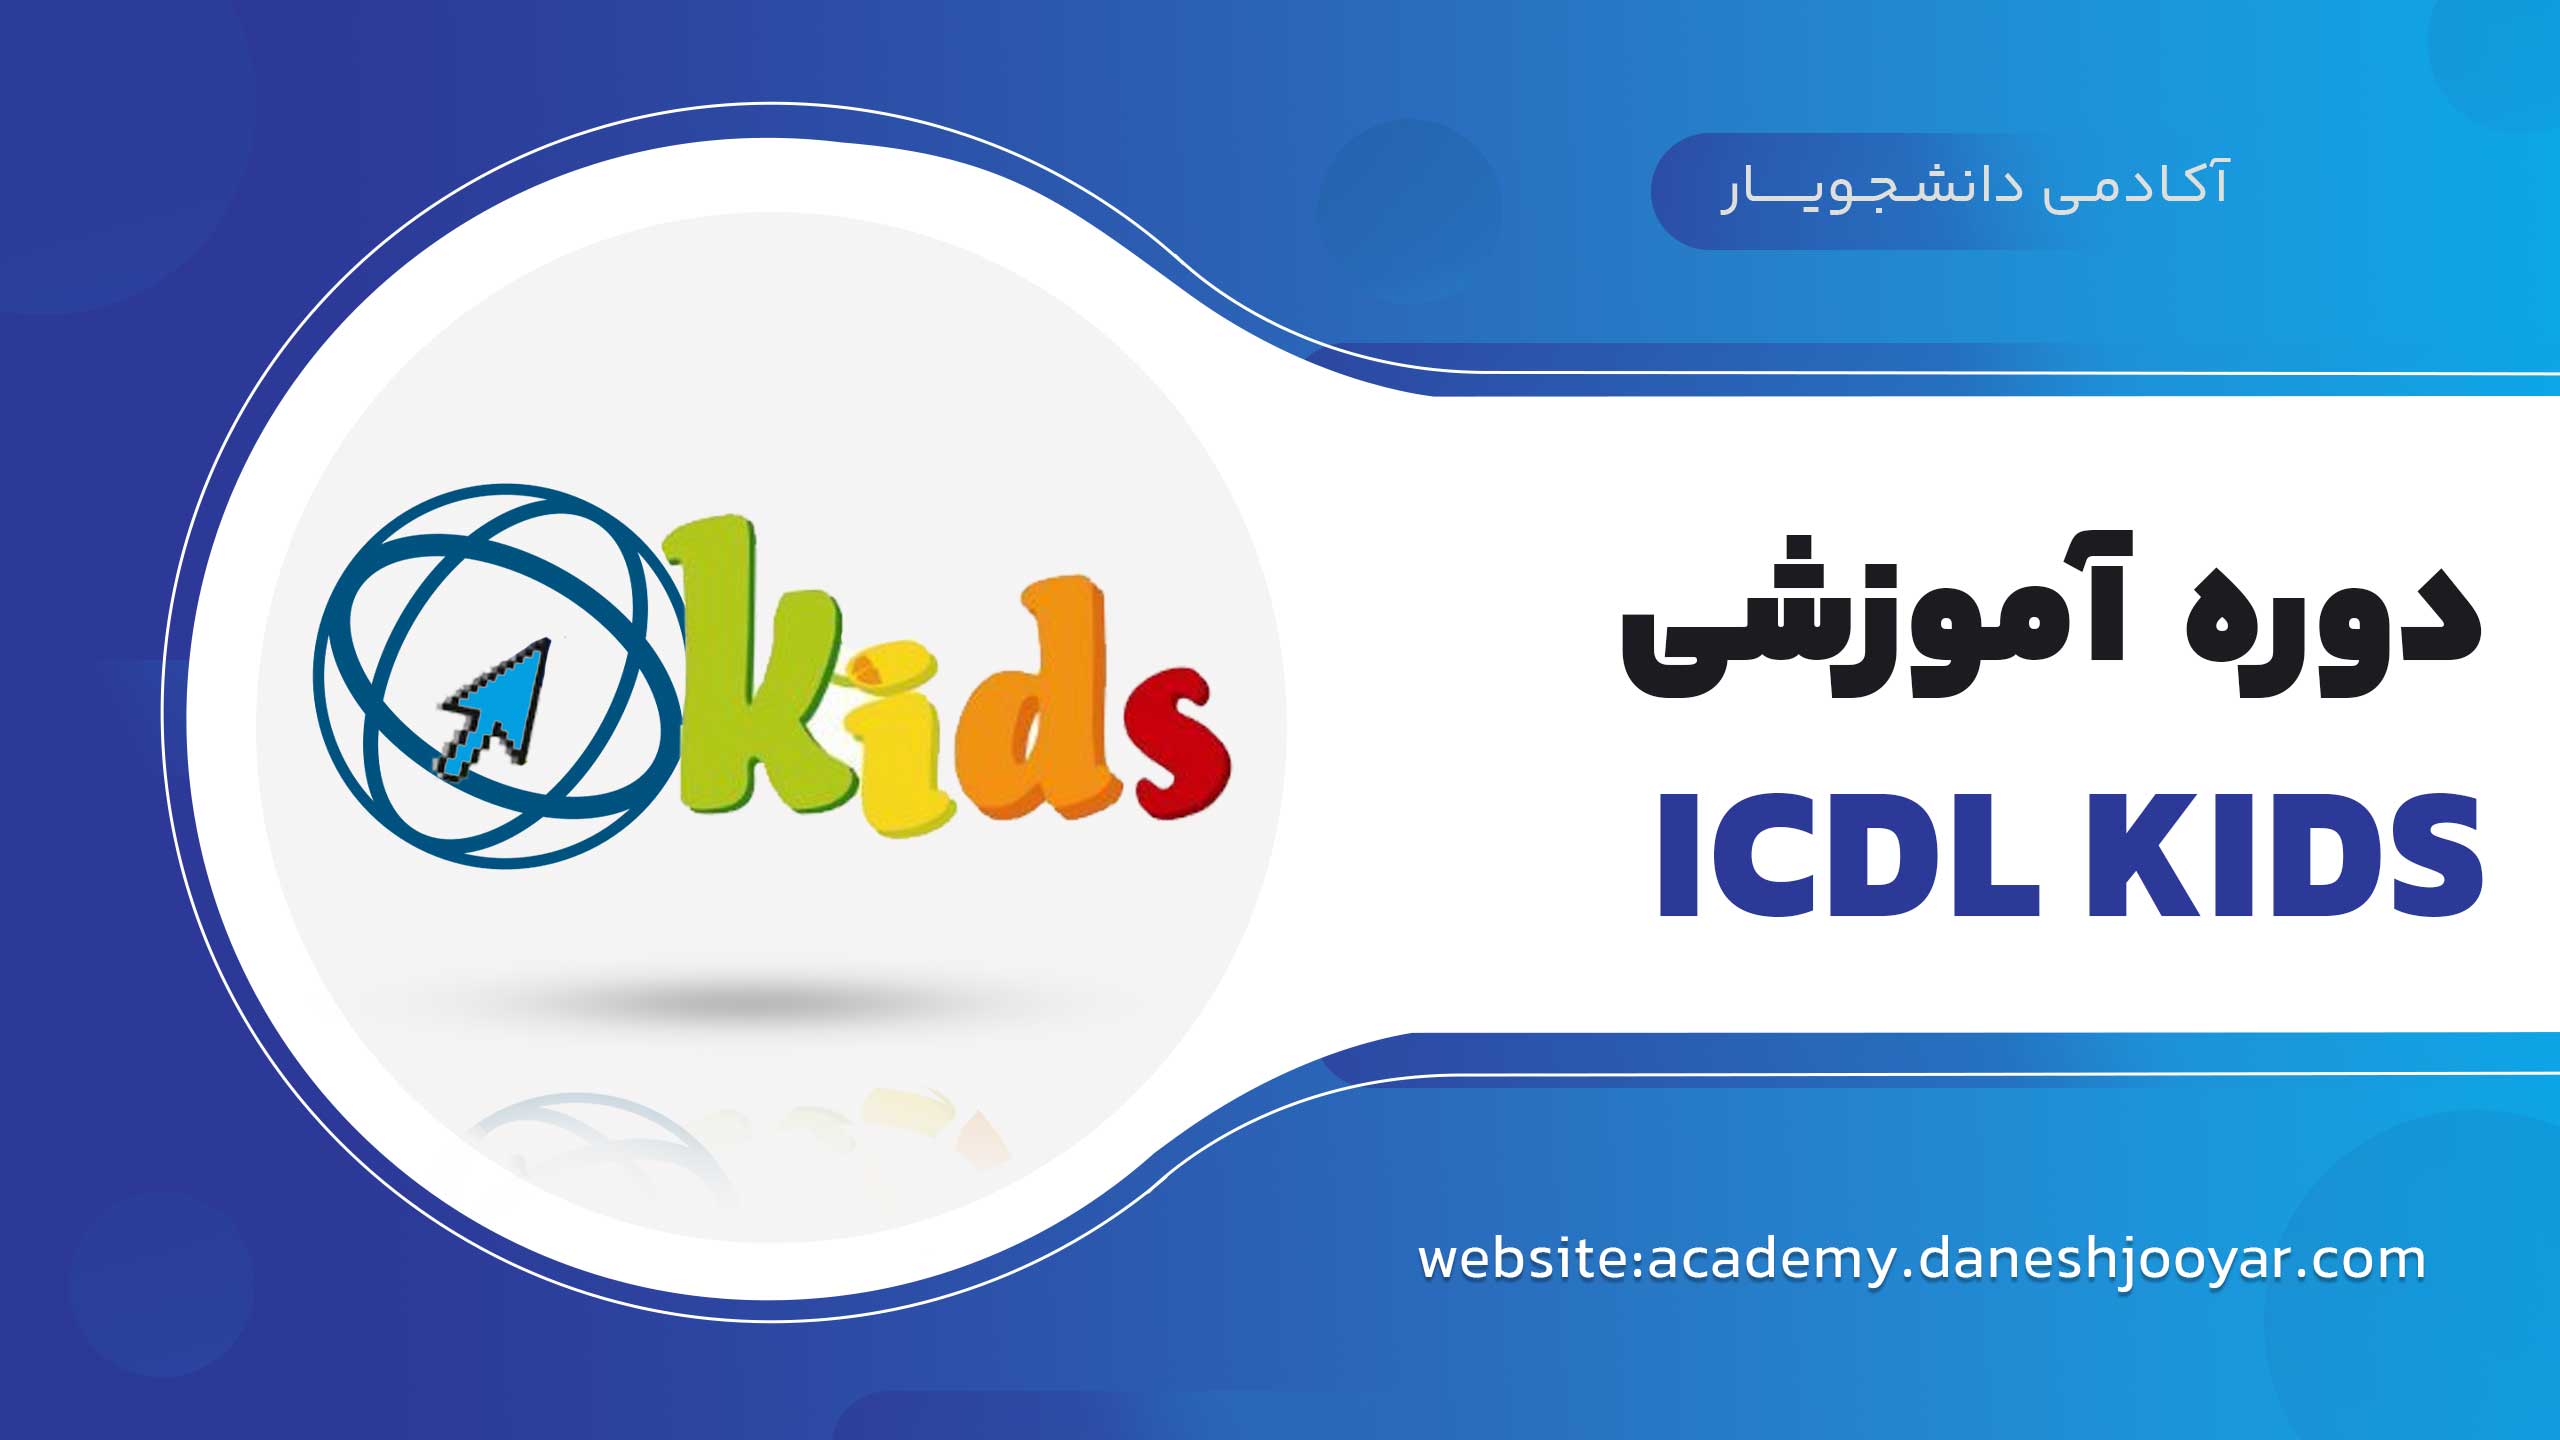 ICDL kids